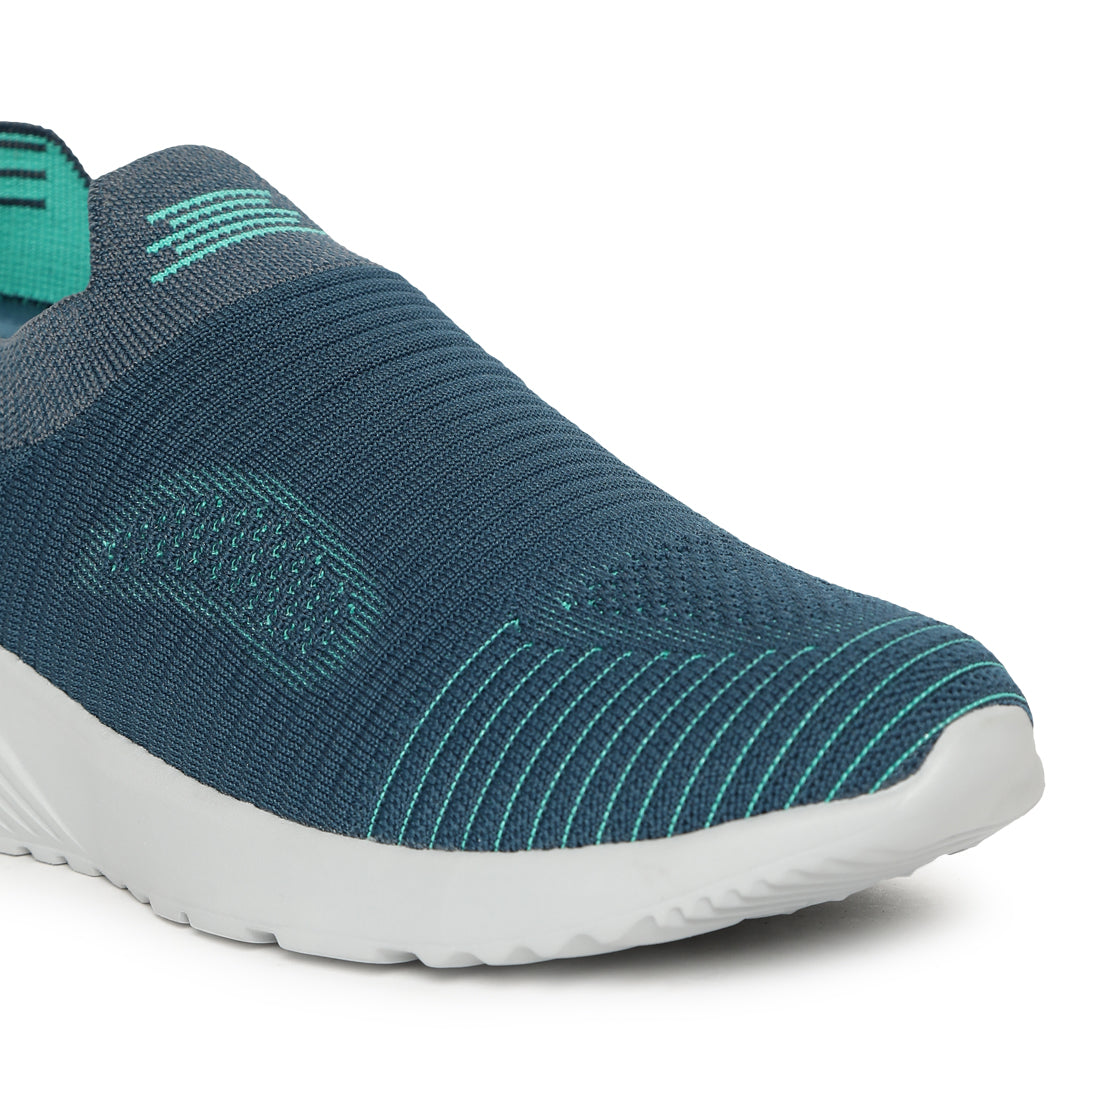 Eeken Teal Blue - Sea Green Athleisure Shoes for Men